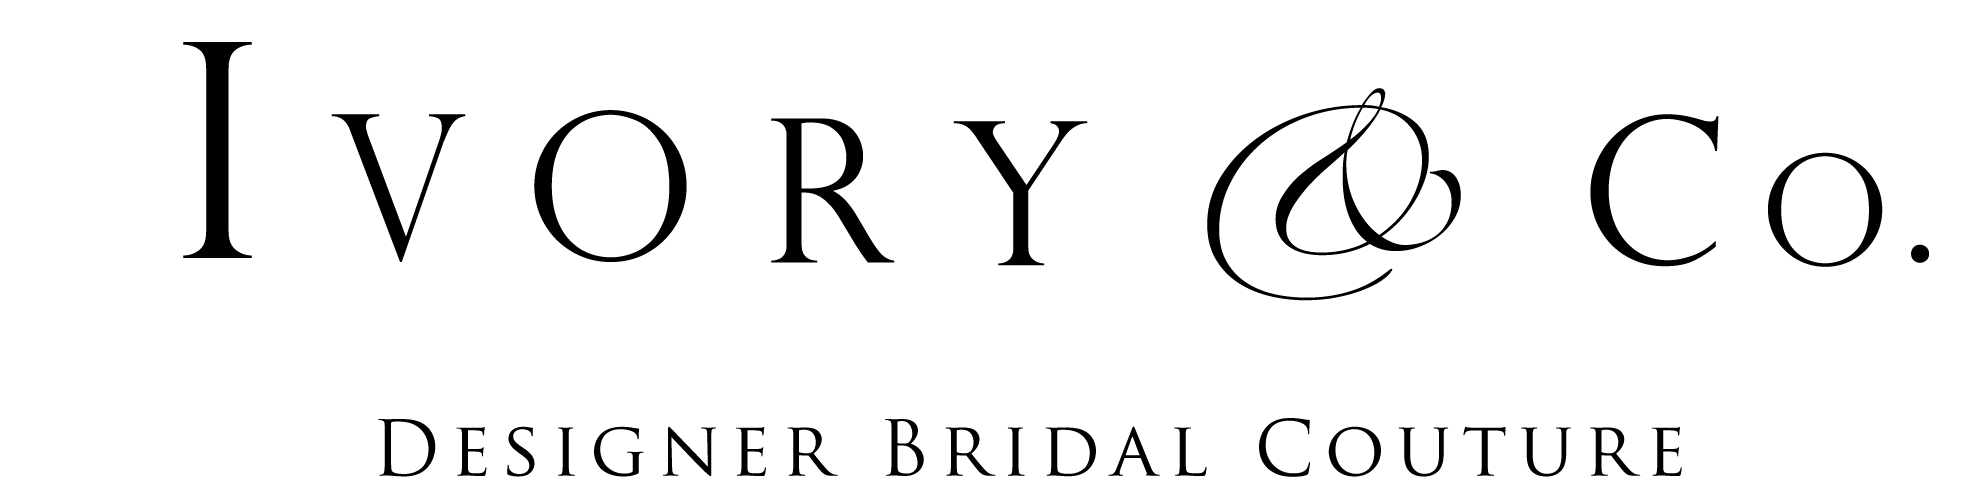 Bridal Couture Logo - Ivory & Co. designer bridal gowns